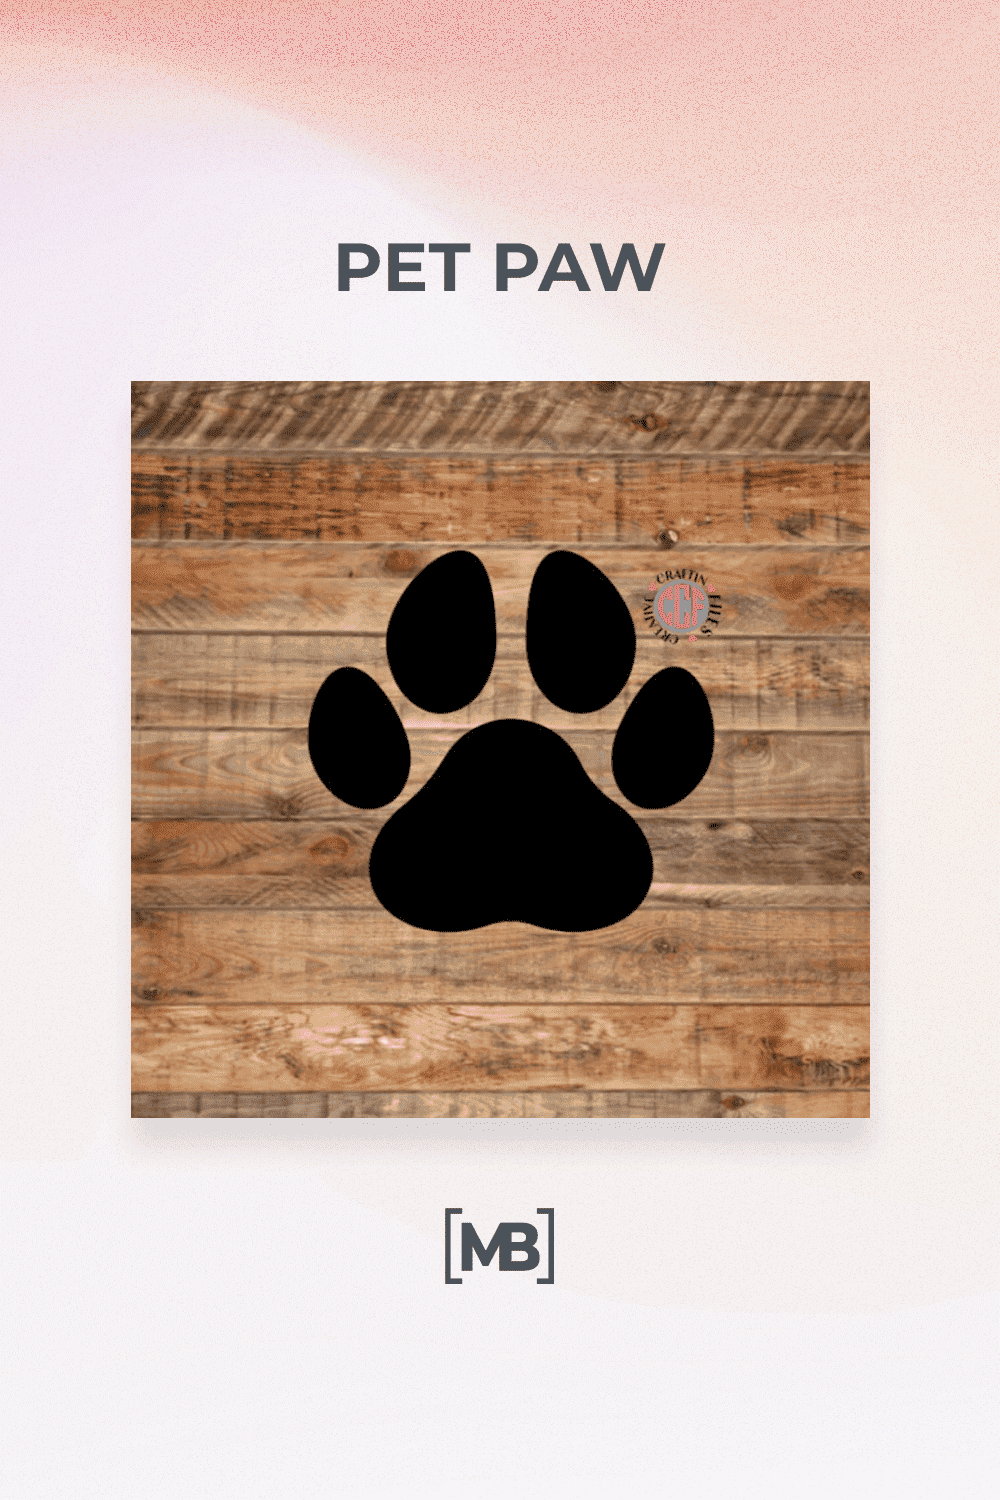 Pet Paw.